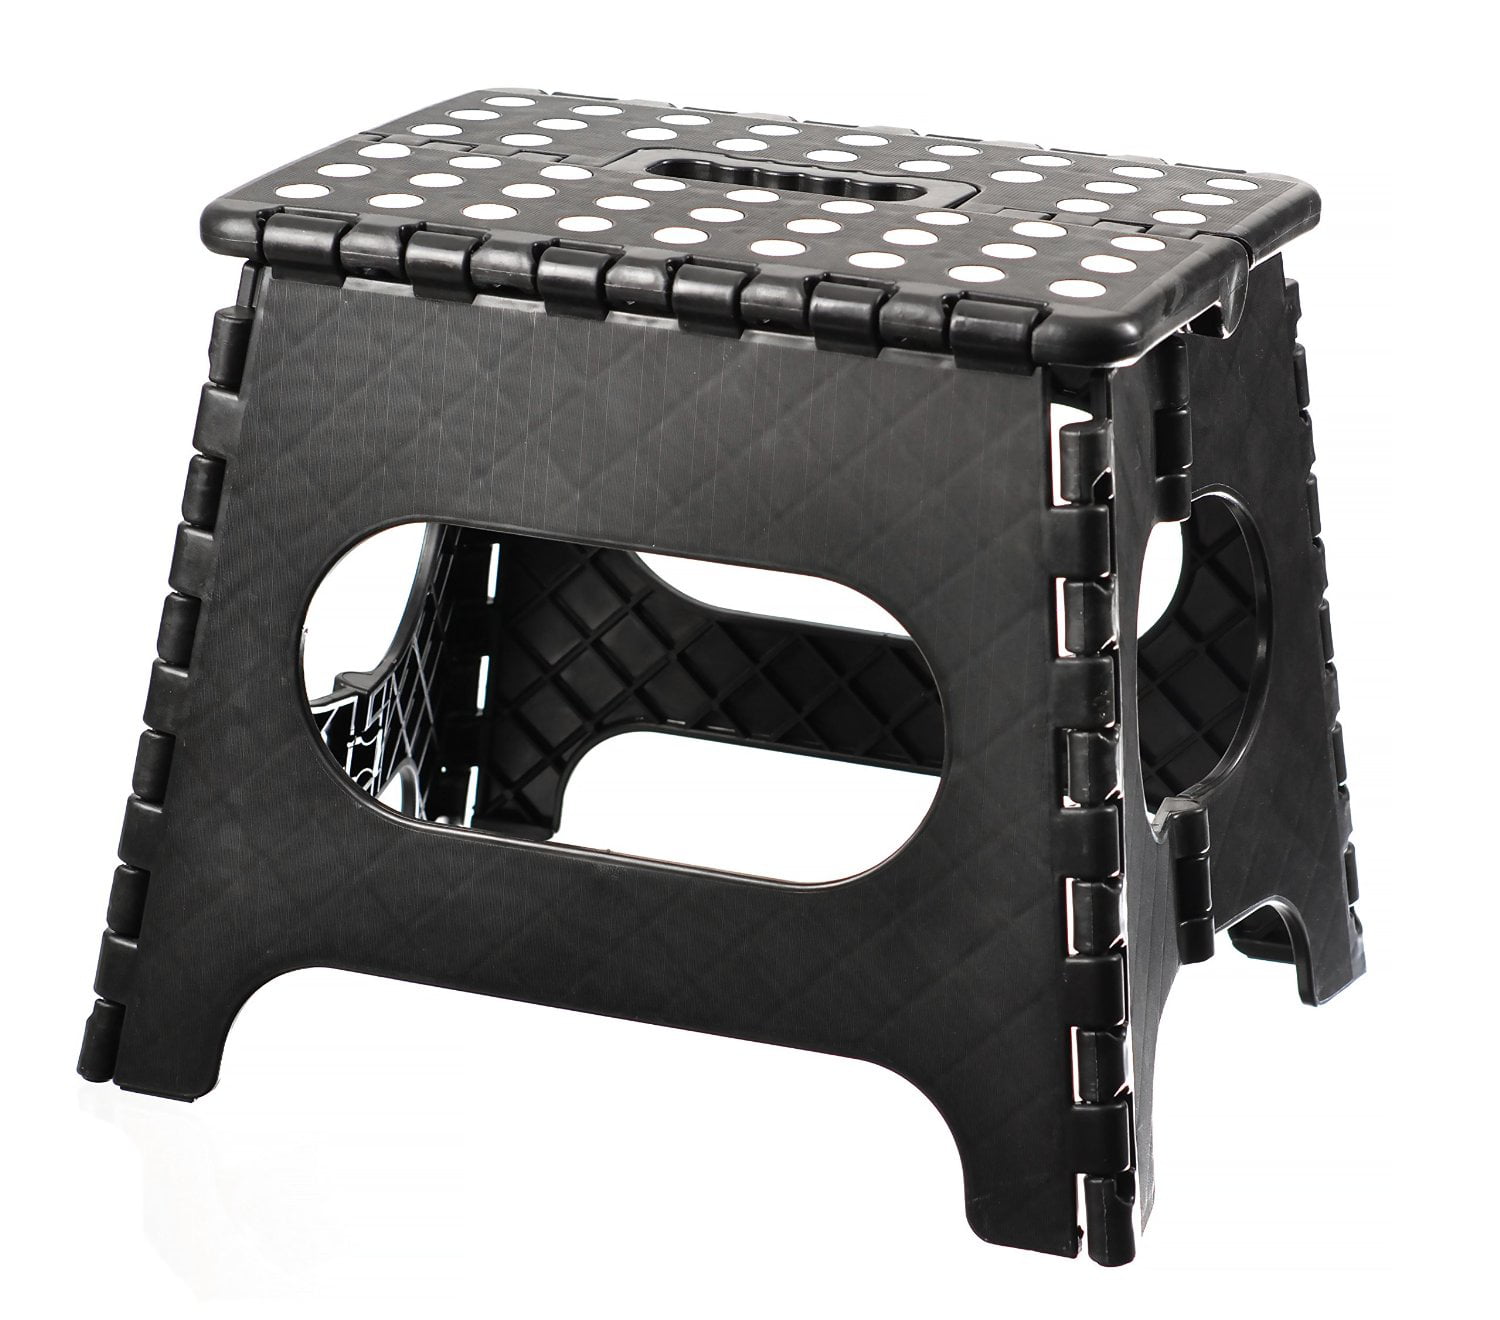 foldable stool for kids